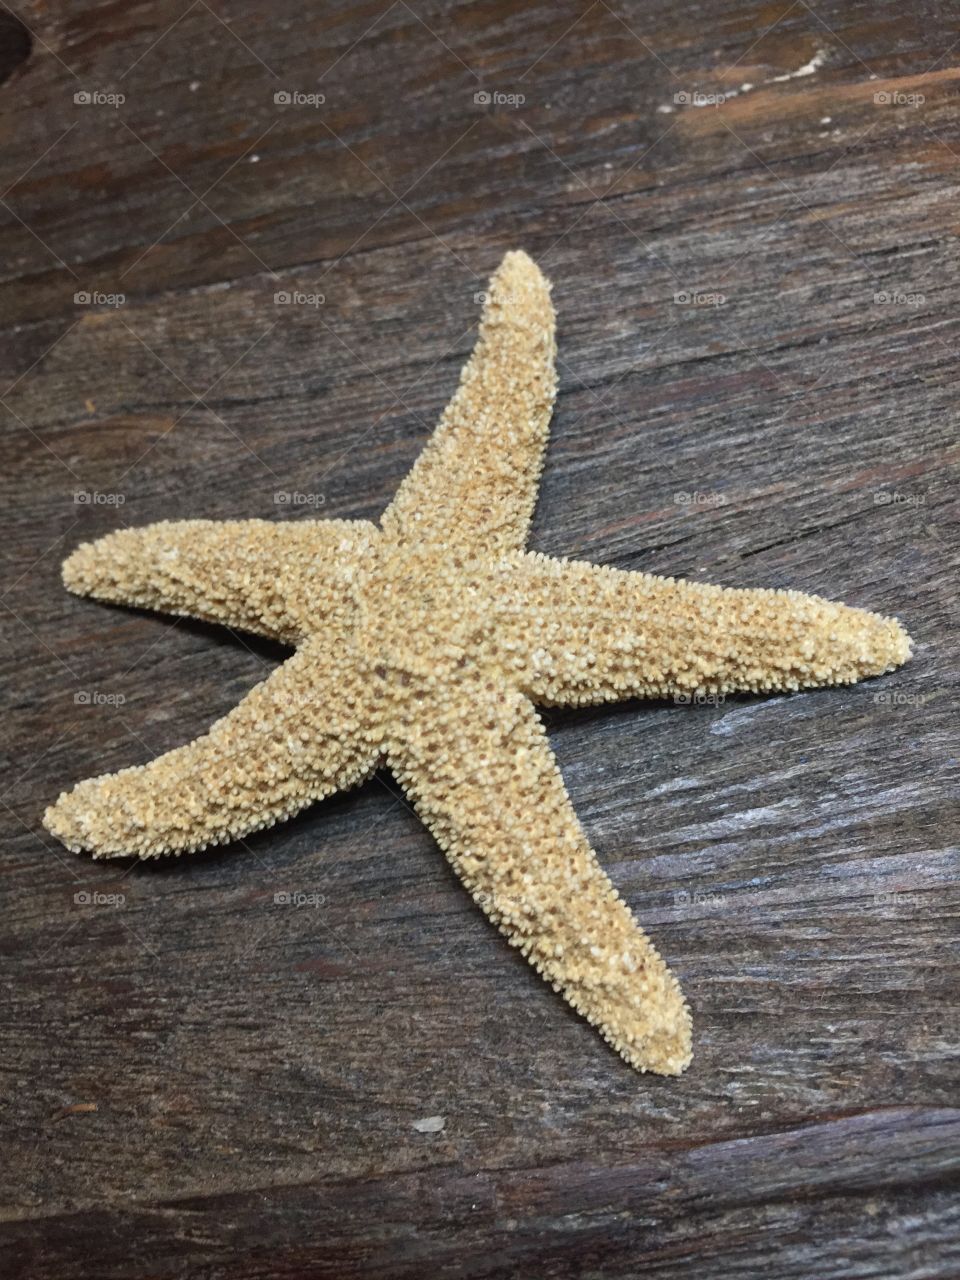 Single beige starfish on dark wood surface 